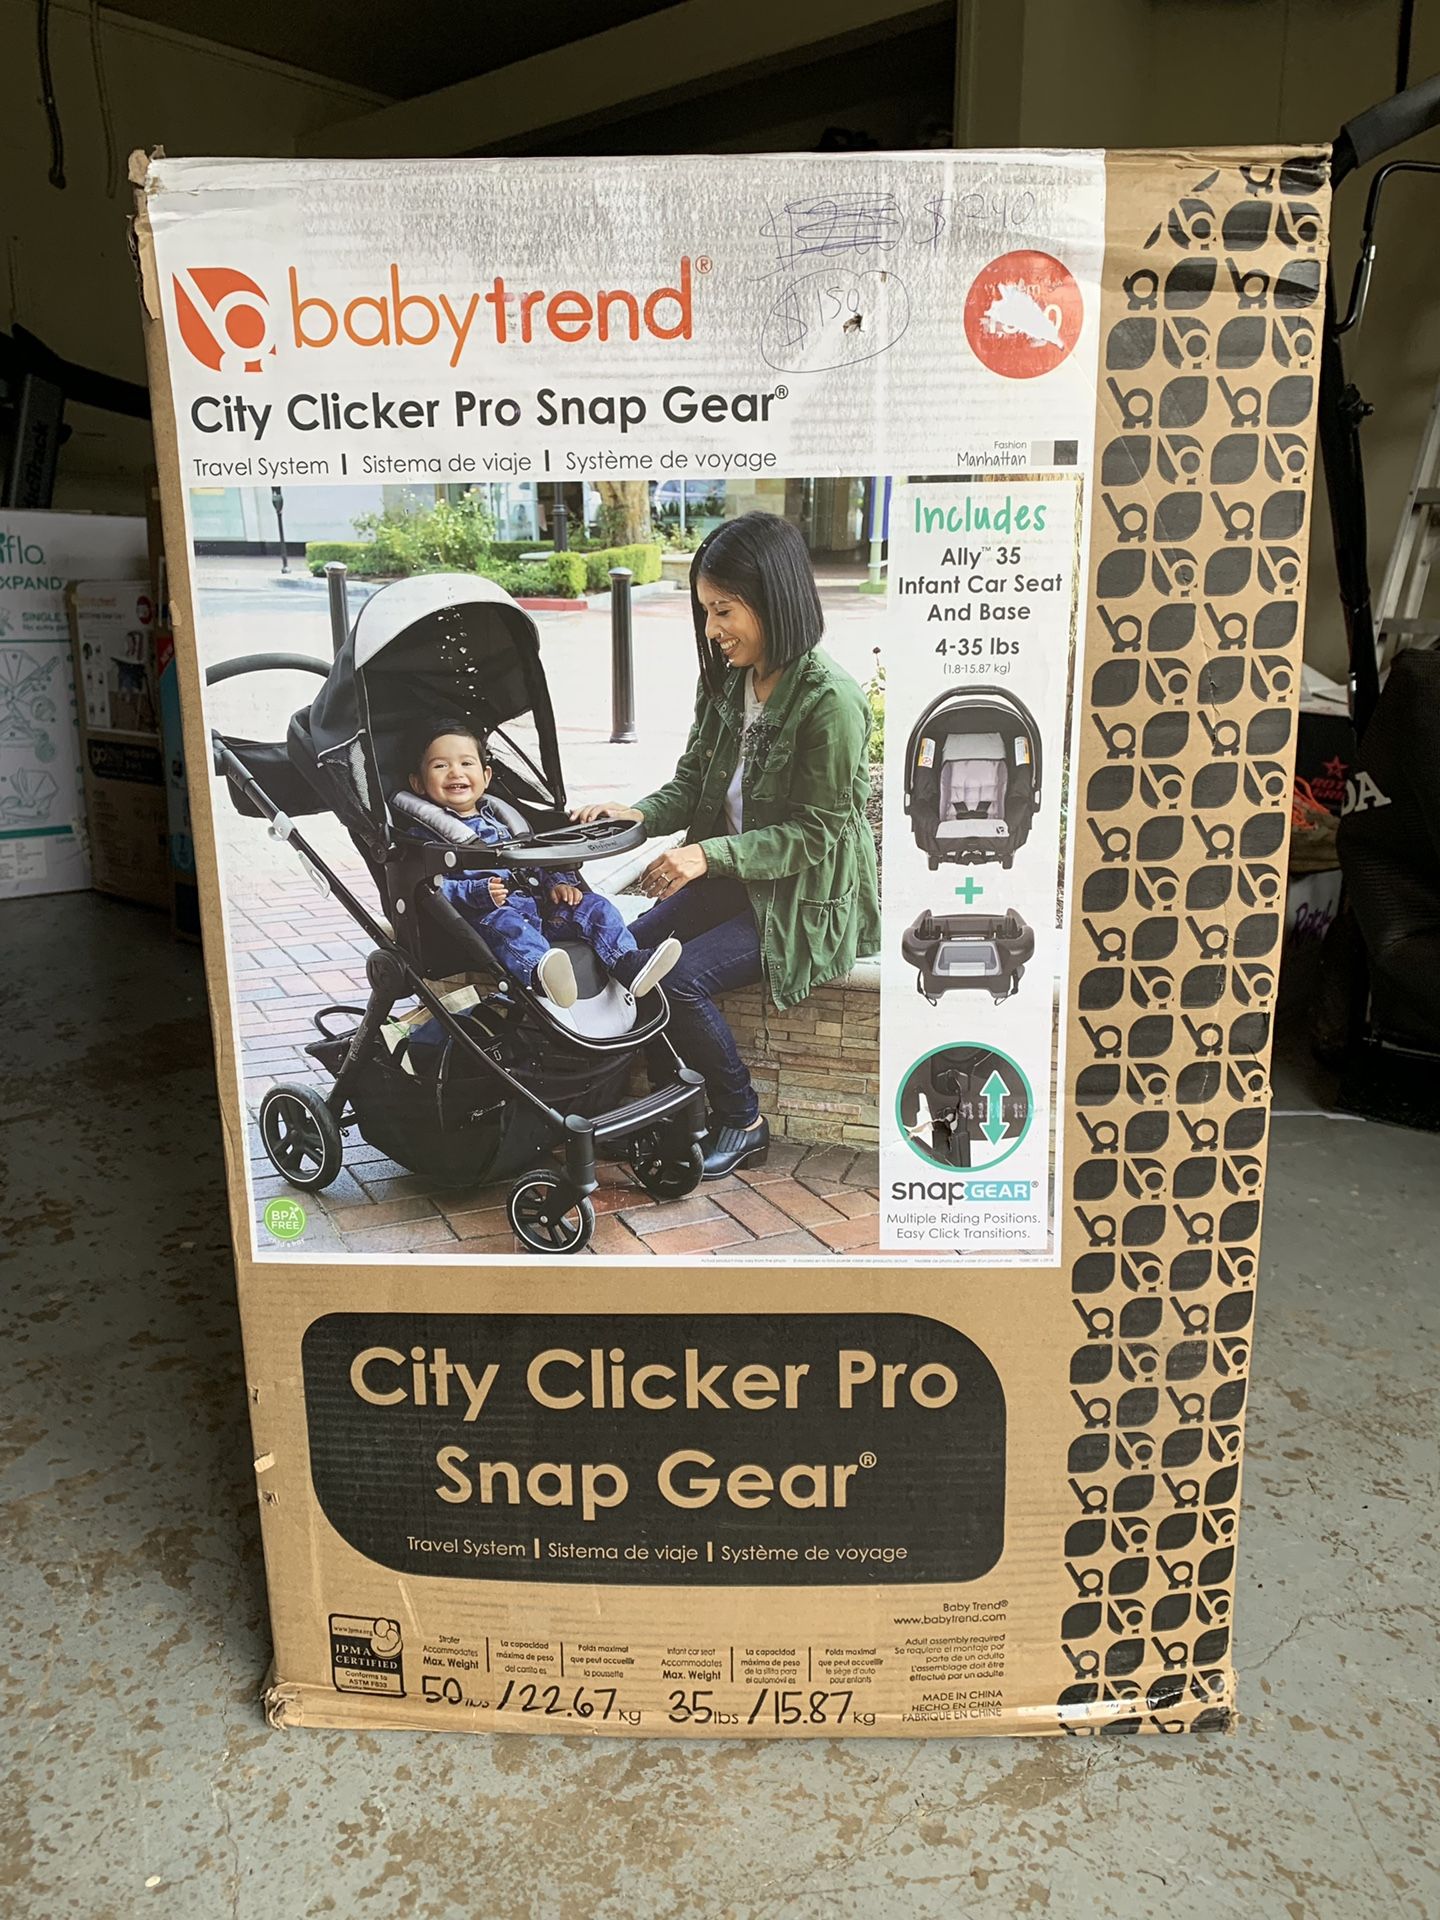 Baby trend city clicker pro baby stroller/brand new unused in original unopen box retails for $240